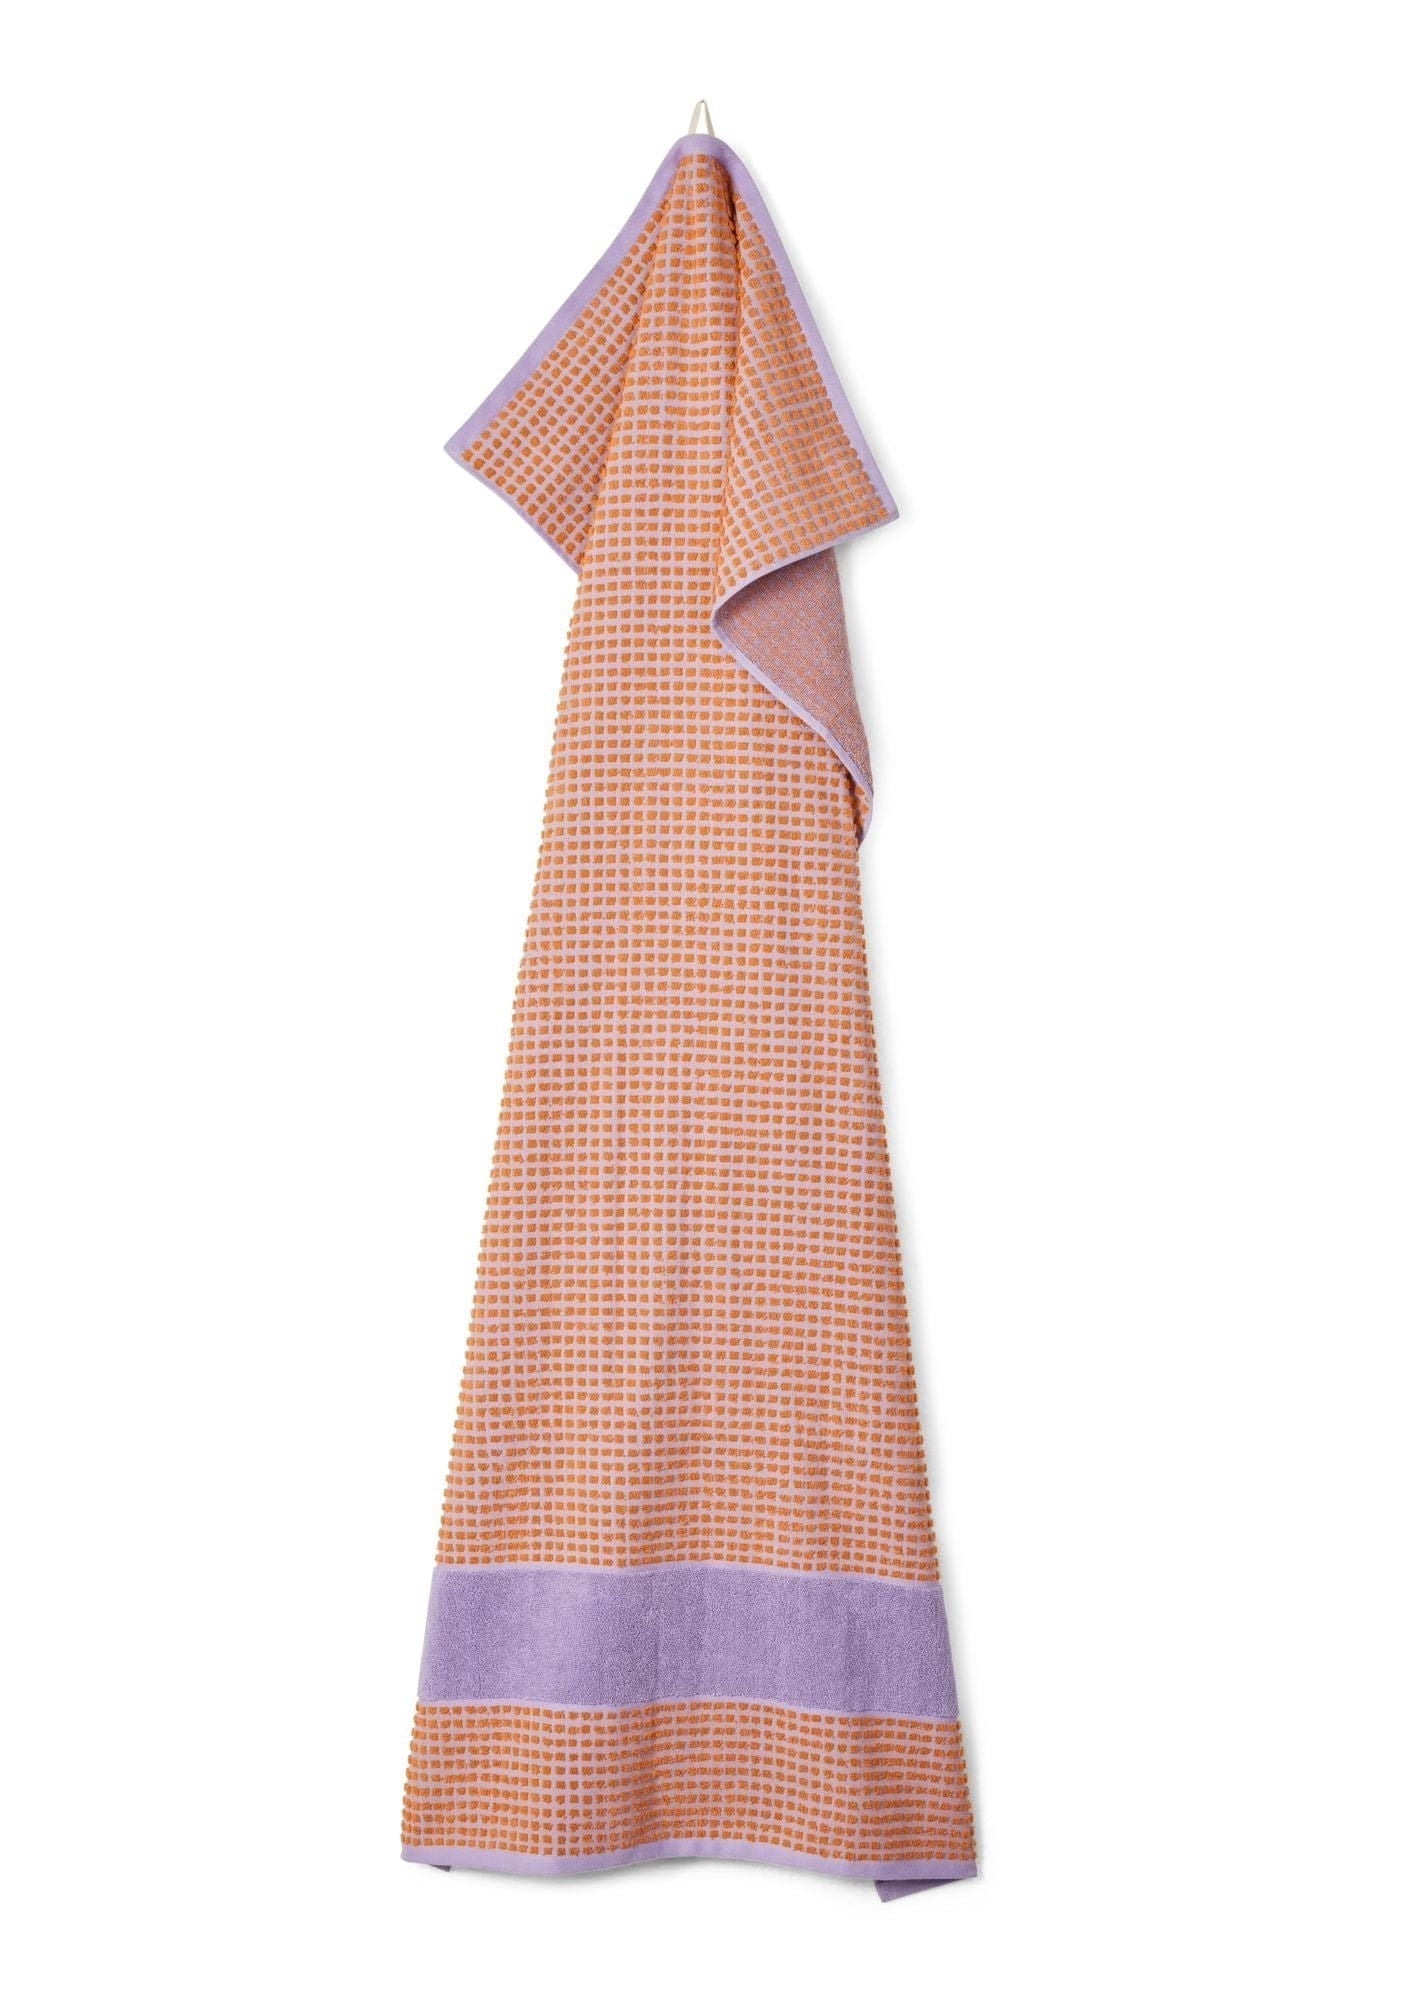 JUNA Kontrollera handduken 70x140 cm, lavendel/persika